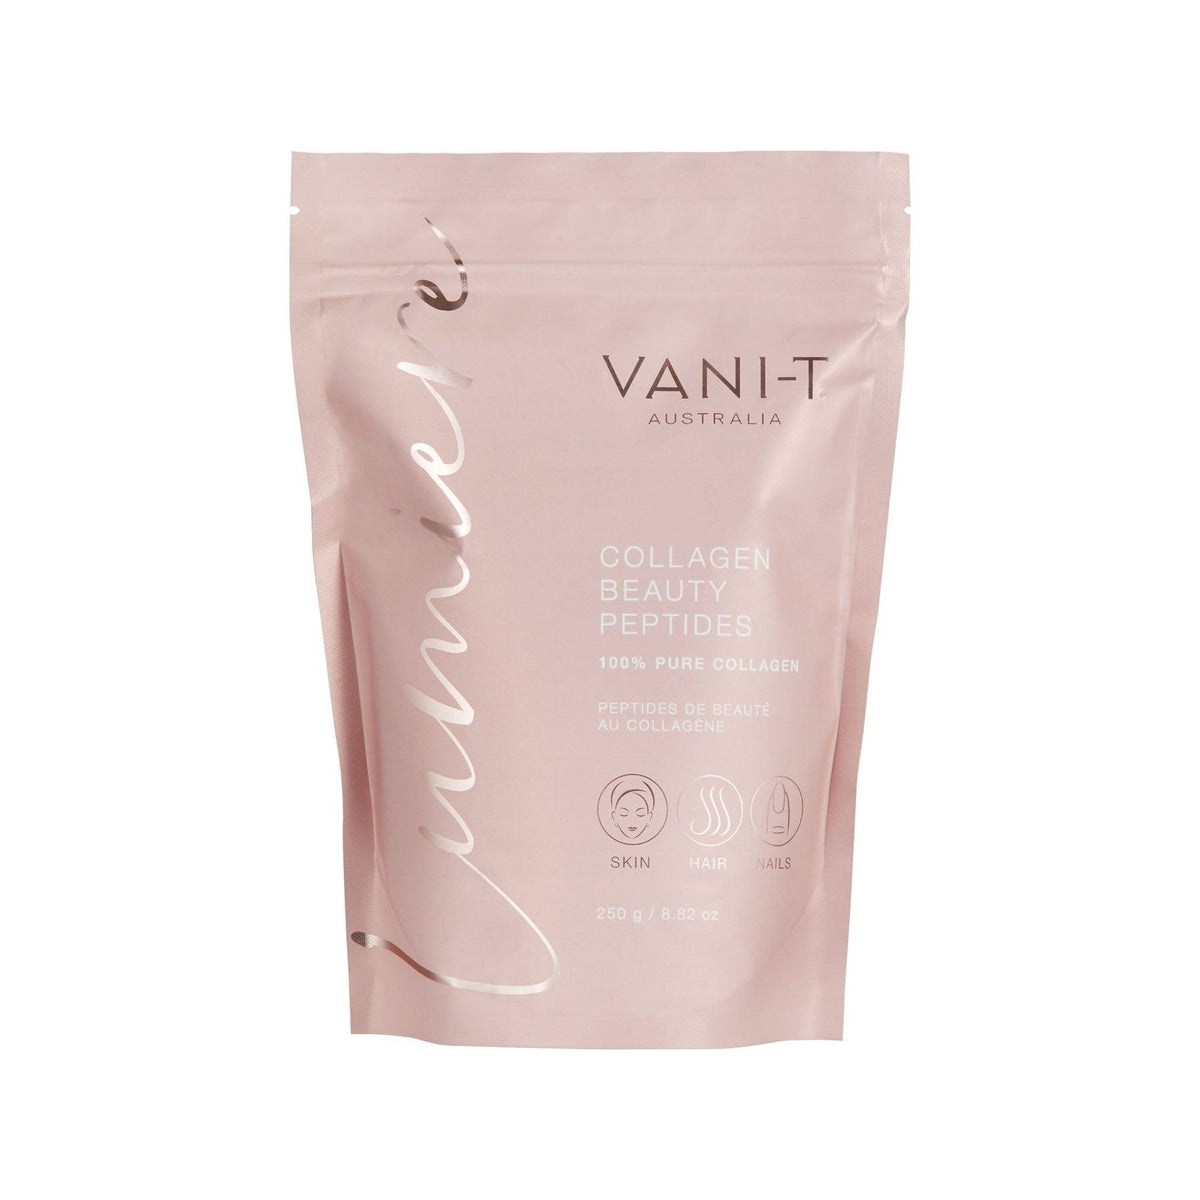 Lumiere Collagen Beauty Peptides Skin - Vani-T - Luxe Pacifique